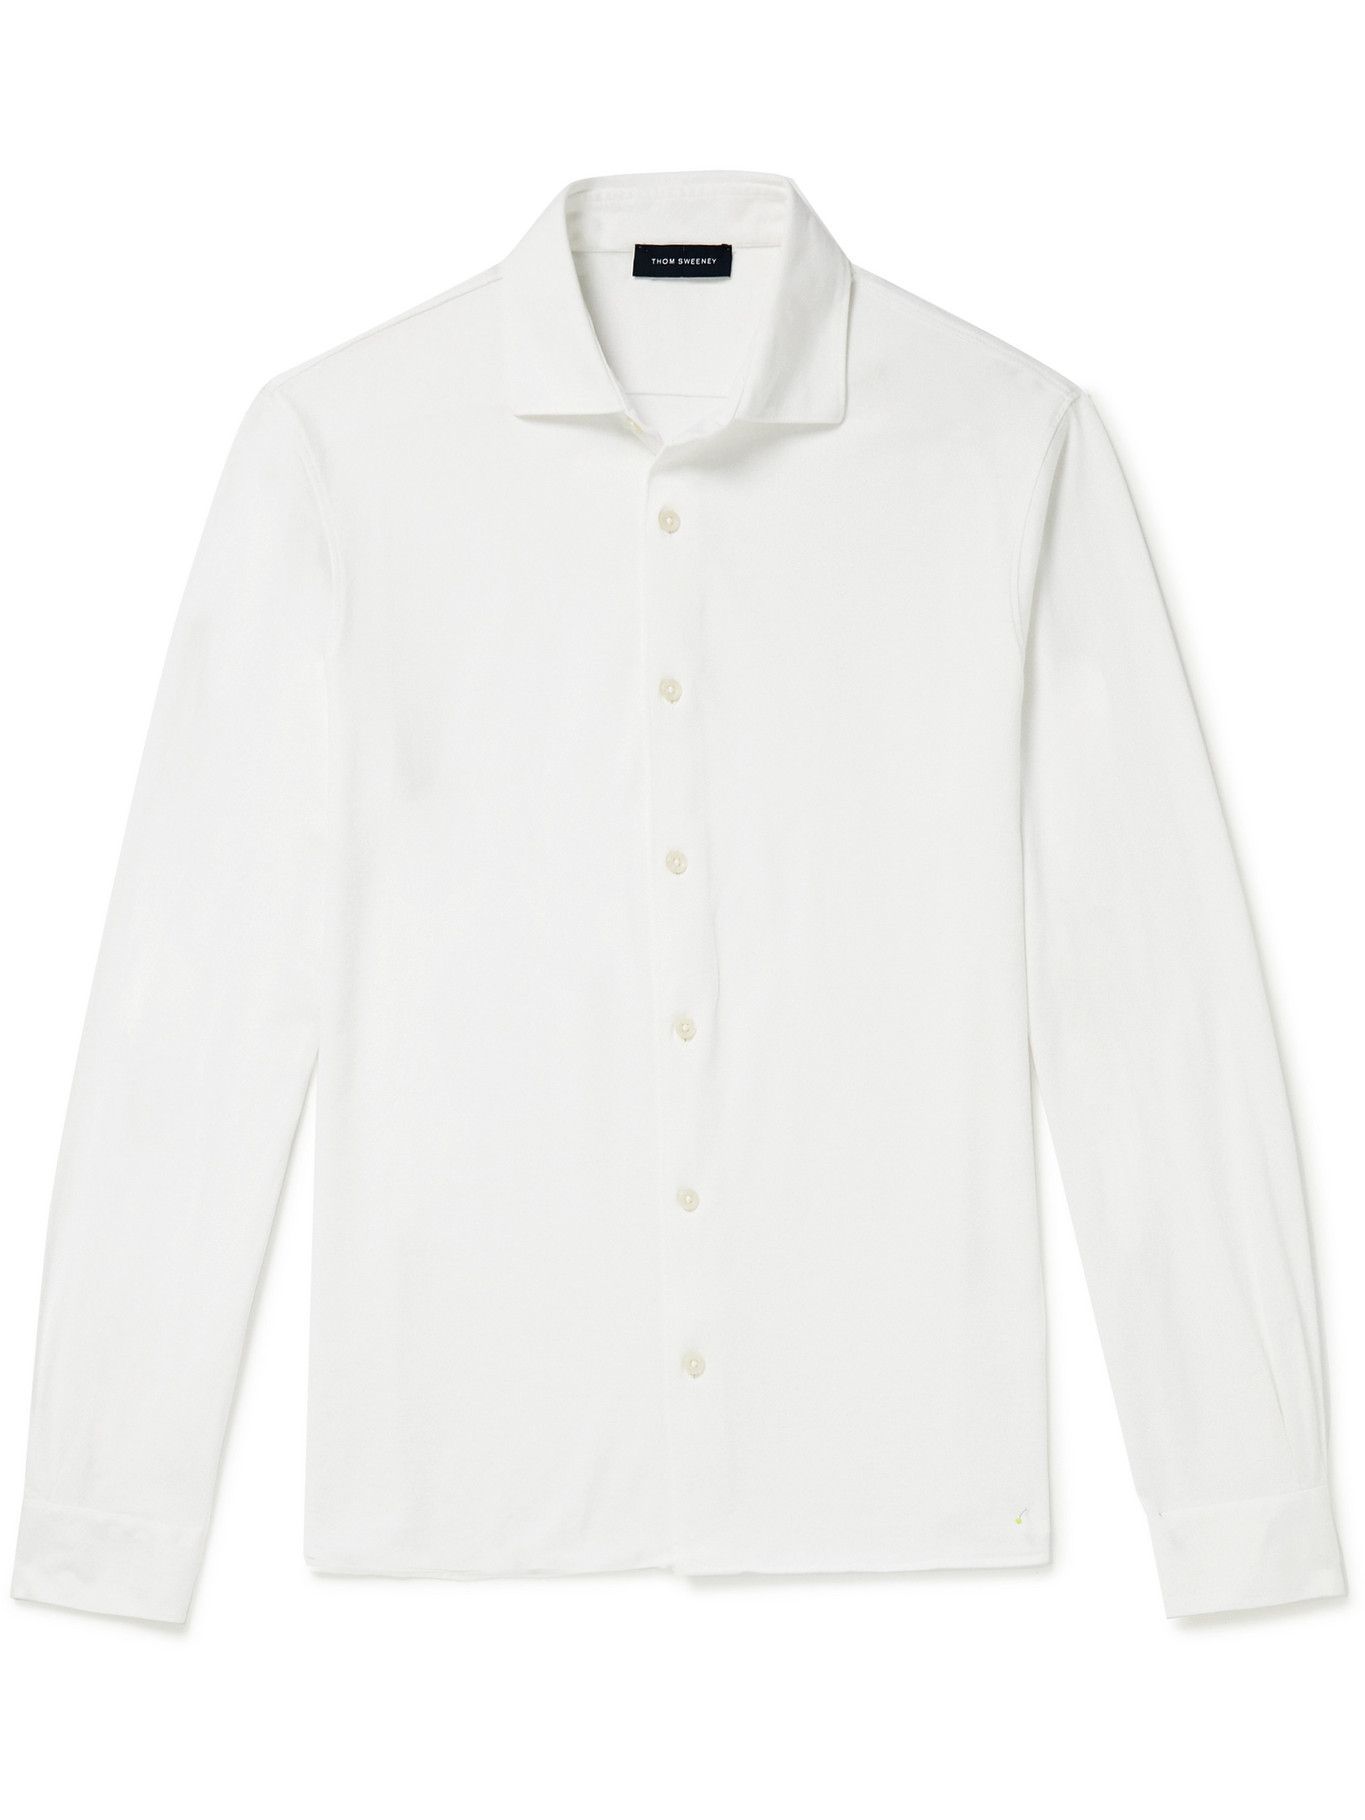 THOM SWEENEY - Cotton-Jersey Shirt - White Thom Sweeney